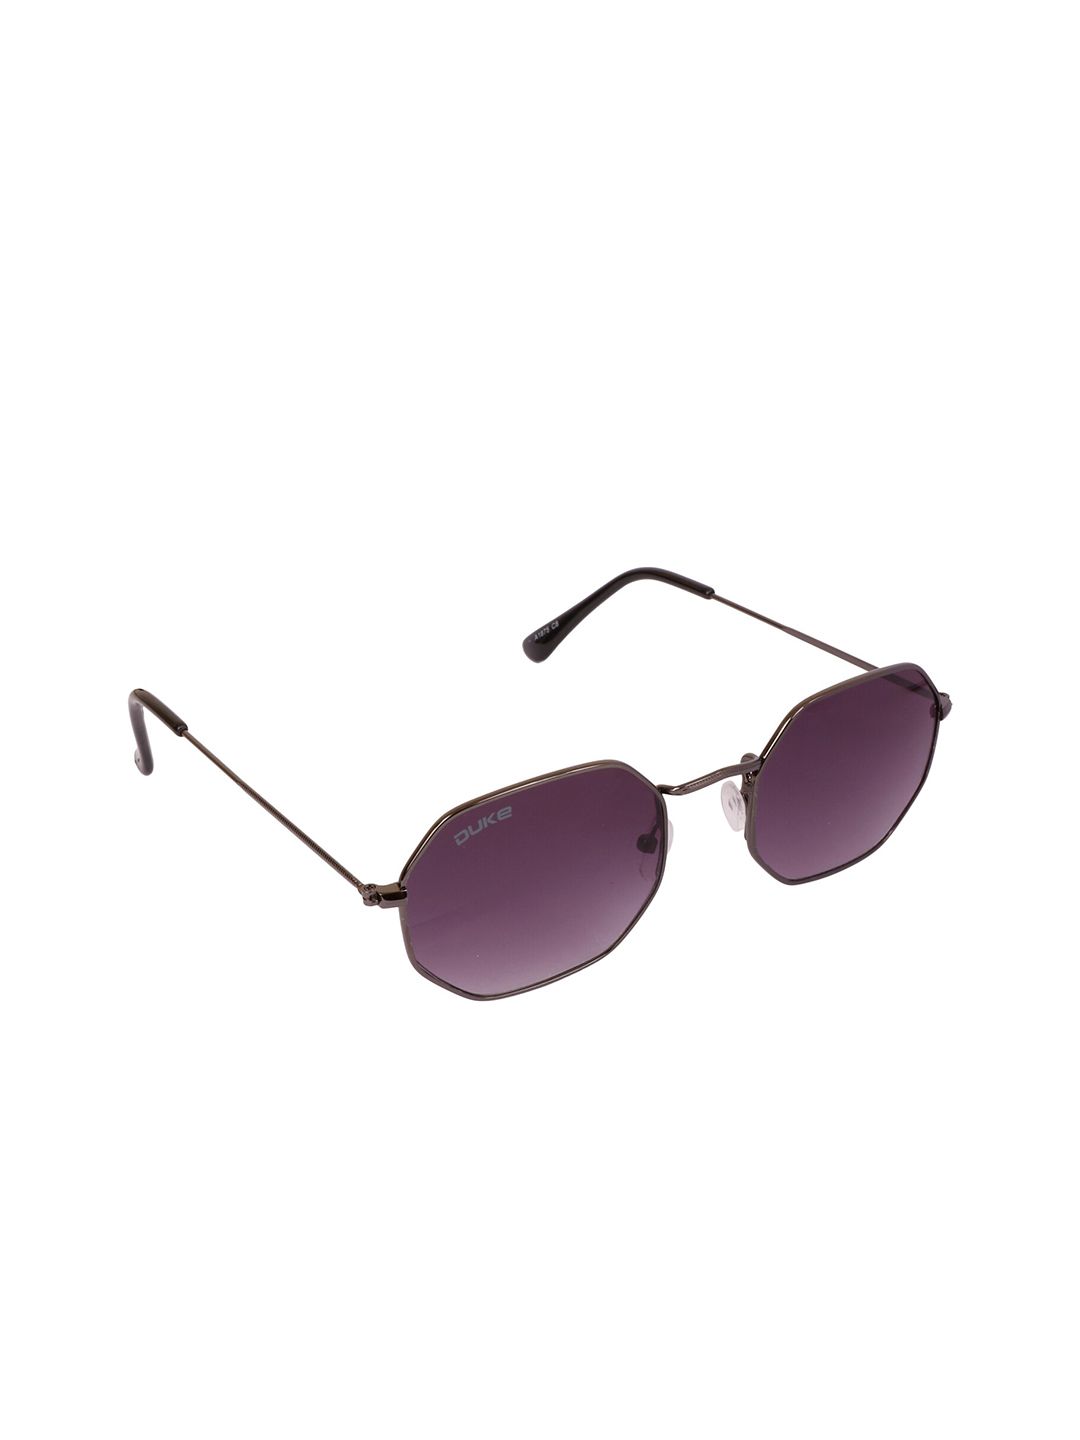 Duke Unisex Purple Lens & Black Octagonal Sunglasses with UV Protected Lens A1875-C10 Price in India